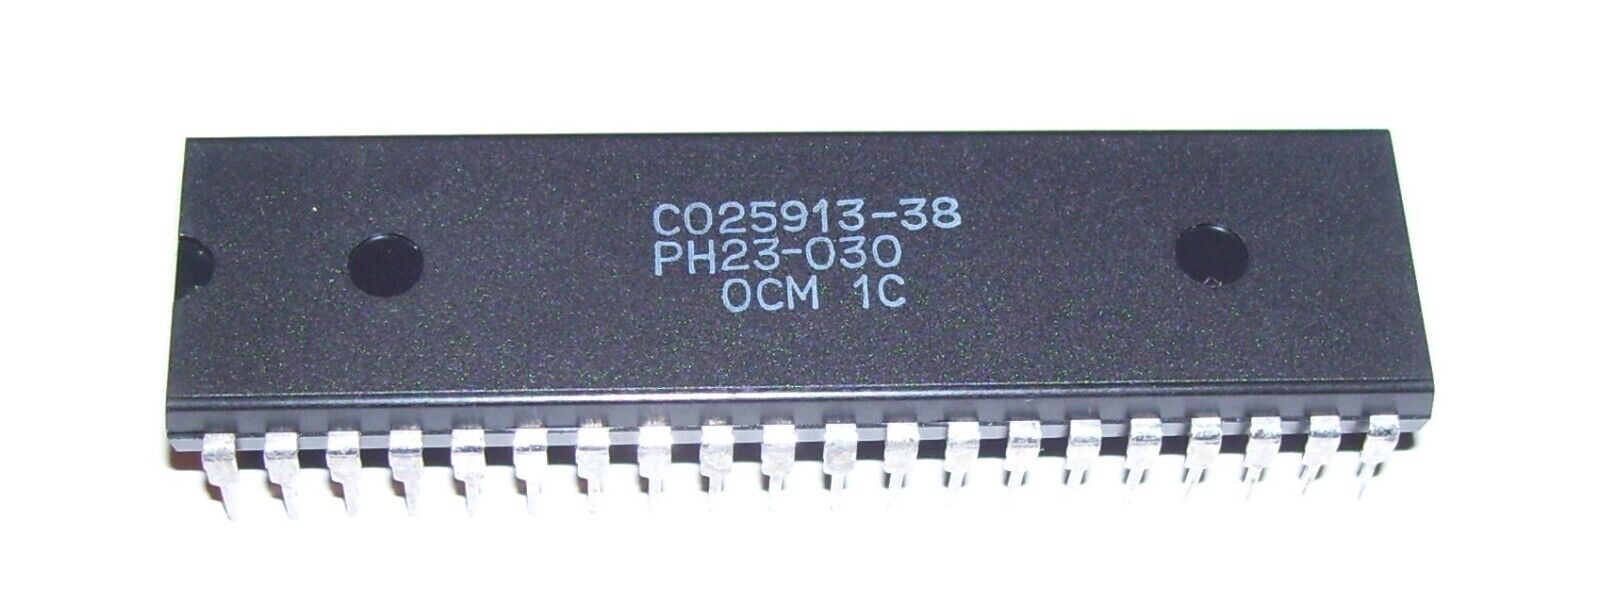 NEW Atari 520 1040 ST STF STFM STE Mega Computer DMA 40 Pin Chip IC C025913-38